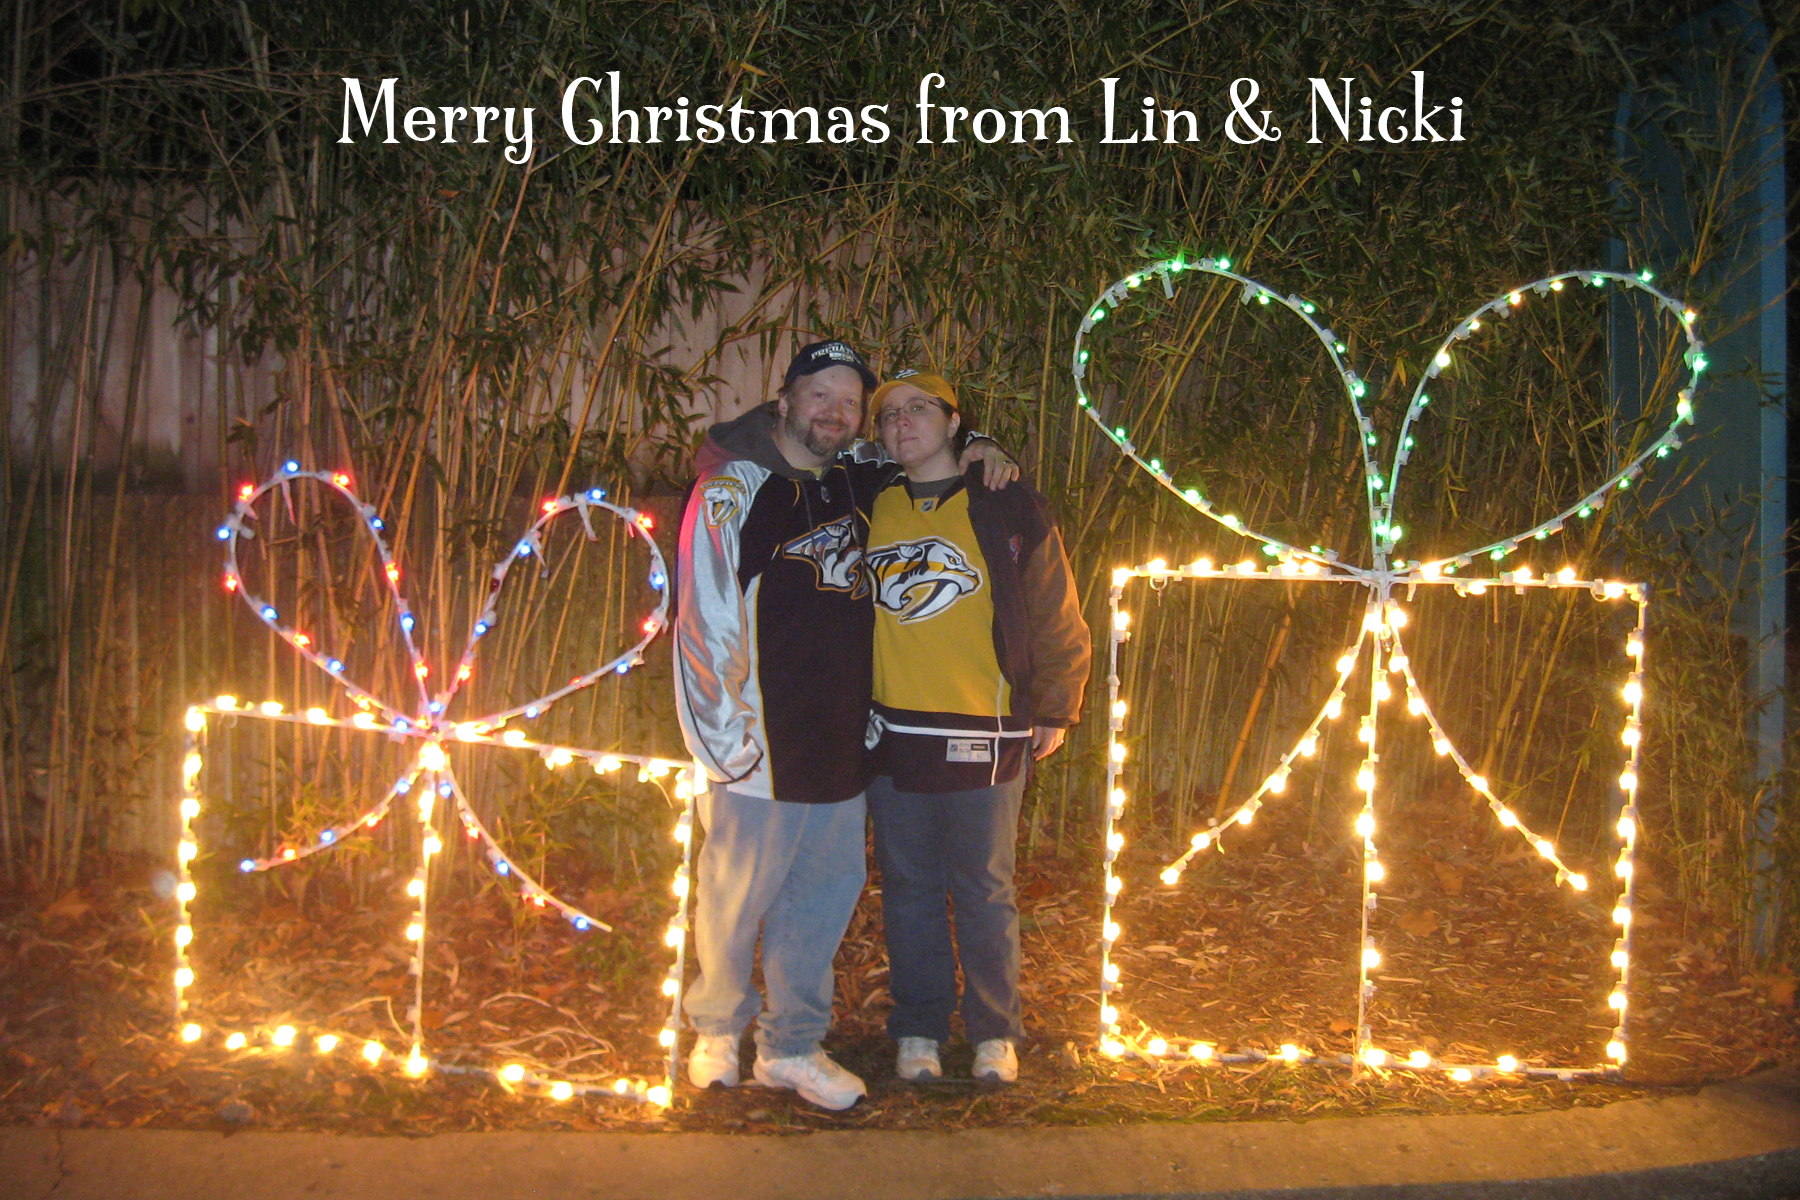 Merry Christmas from Lin and Nicki Workman!